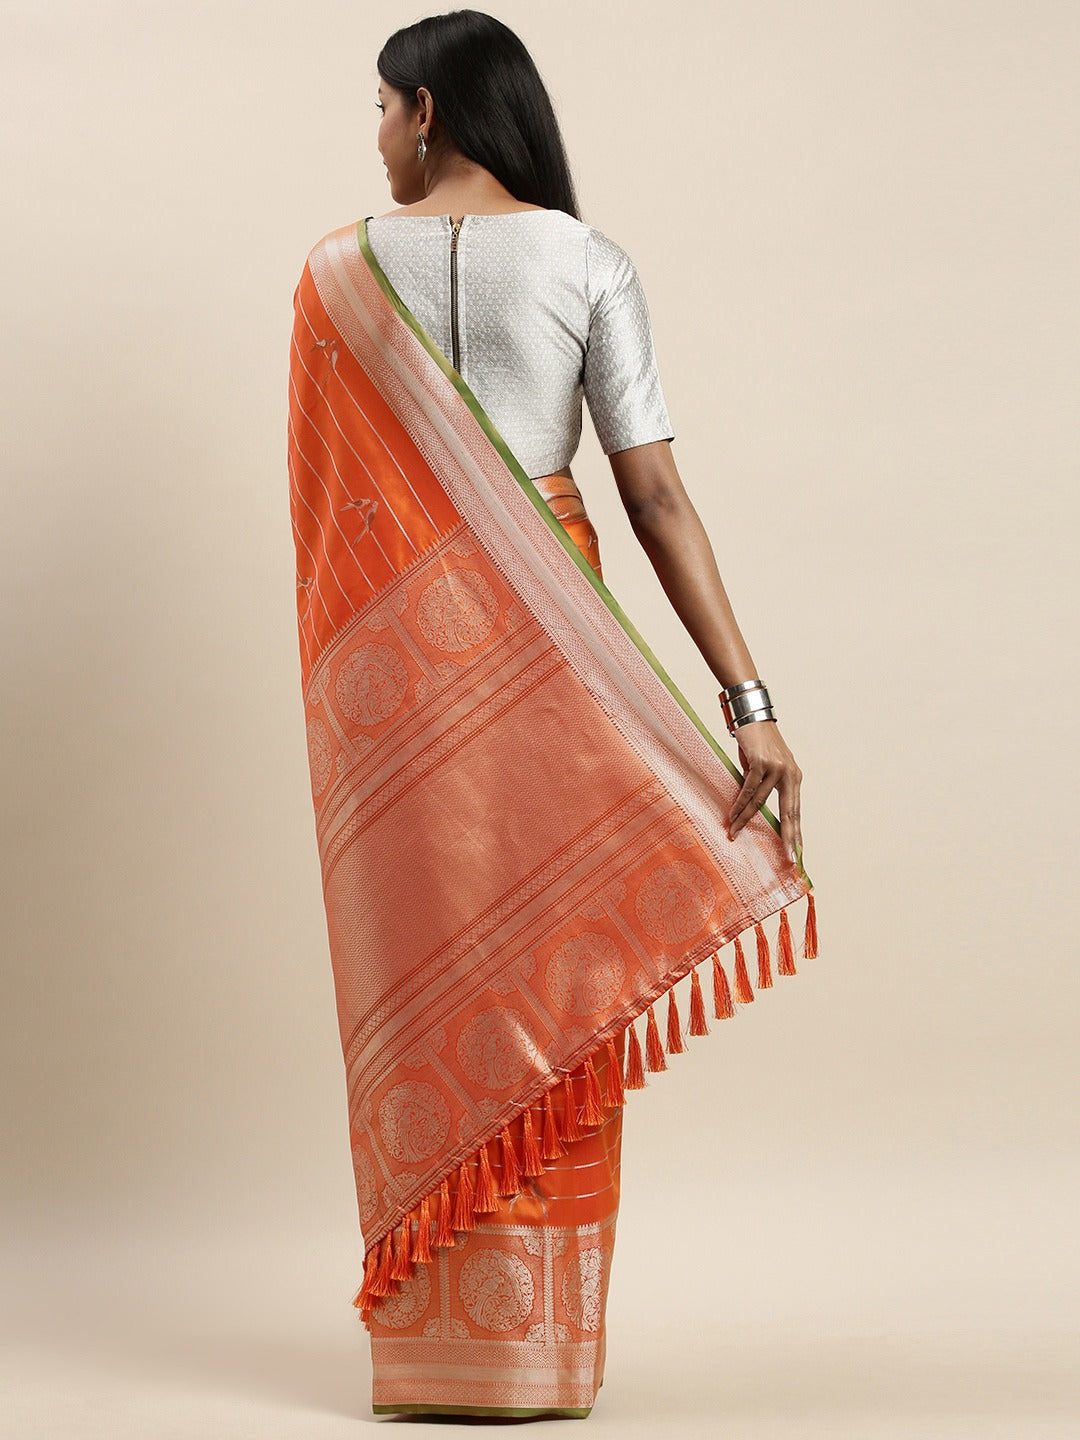 Beautiful Banarasi Striped Orange Colour Silk Blend Saree